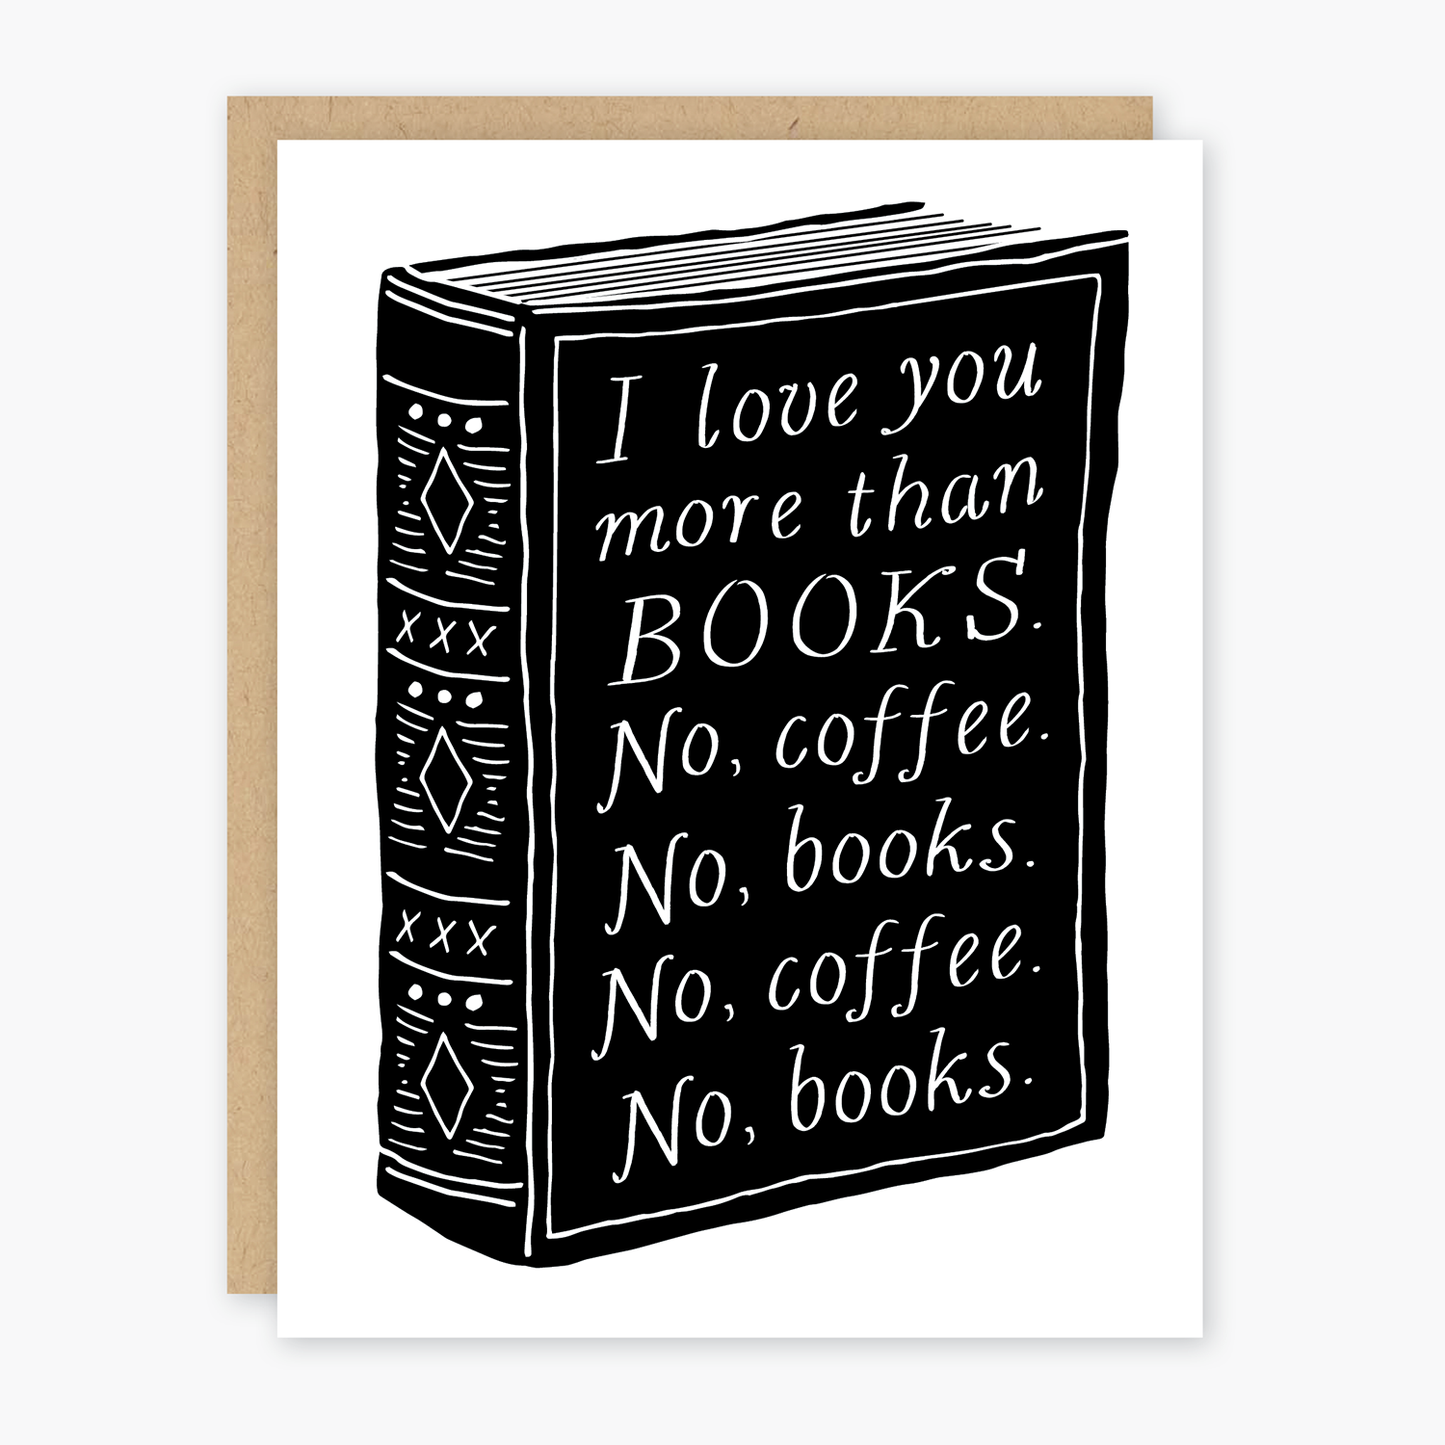 Greeting Card - Books & Coffee